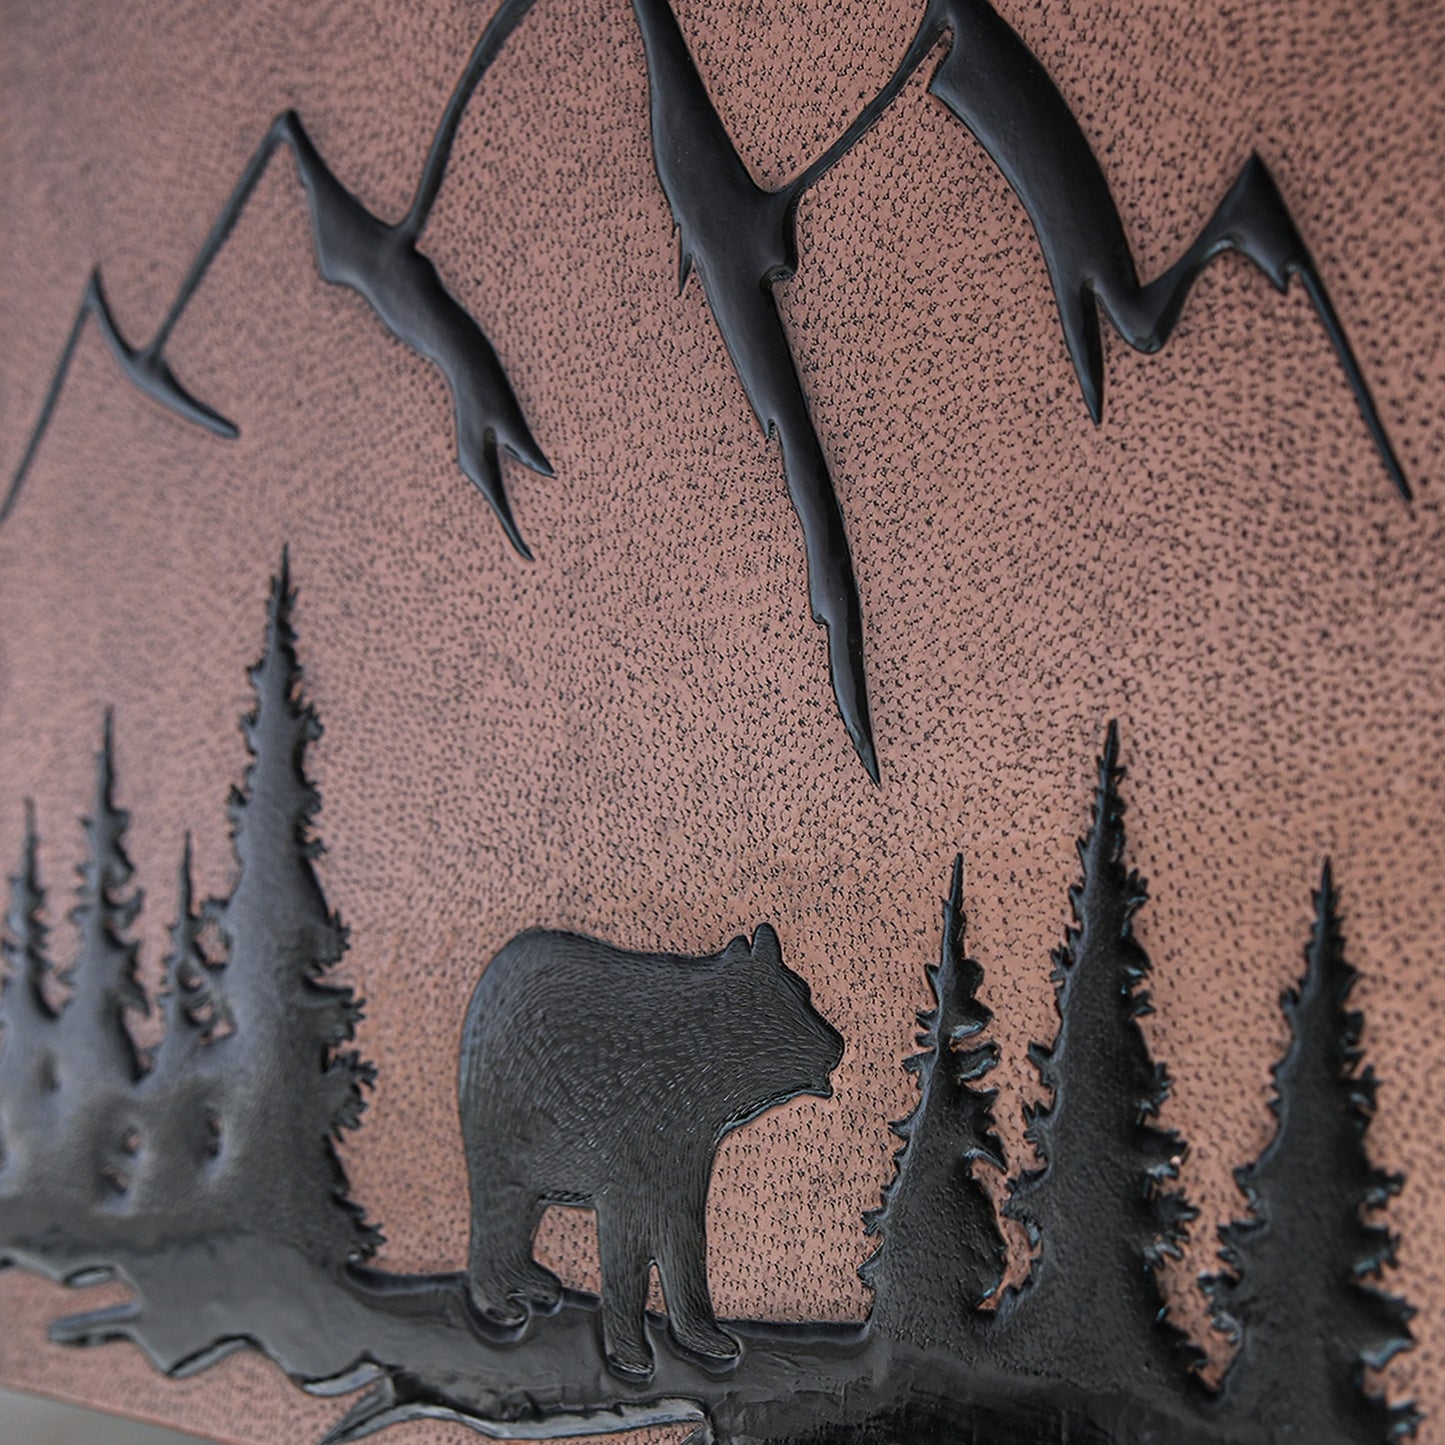 Bear Scene Kitchen Backsplash Tile - 18"x24" Copper&Black